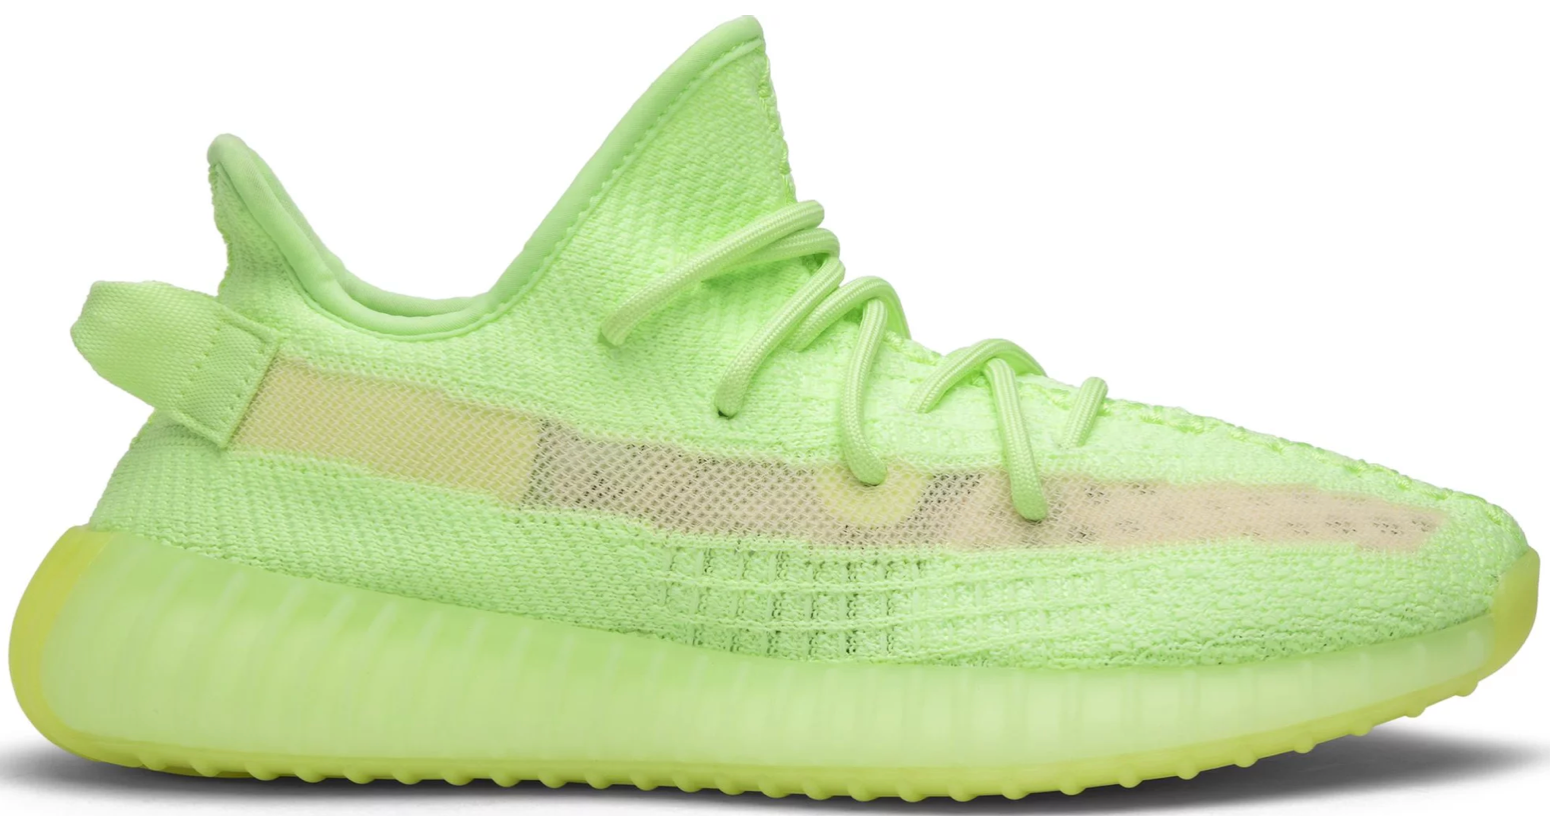 Yeezy x Adidas Neon Green Knit Fabric Boost 350 V2 Yeezreel (Non Reflective)  Sneakers Size 44 2/3 Yeezy x Adidas